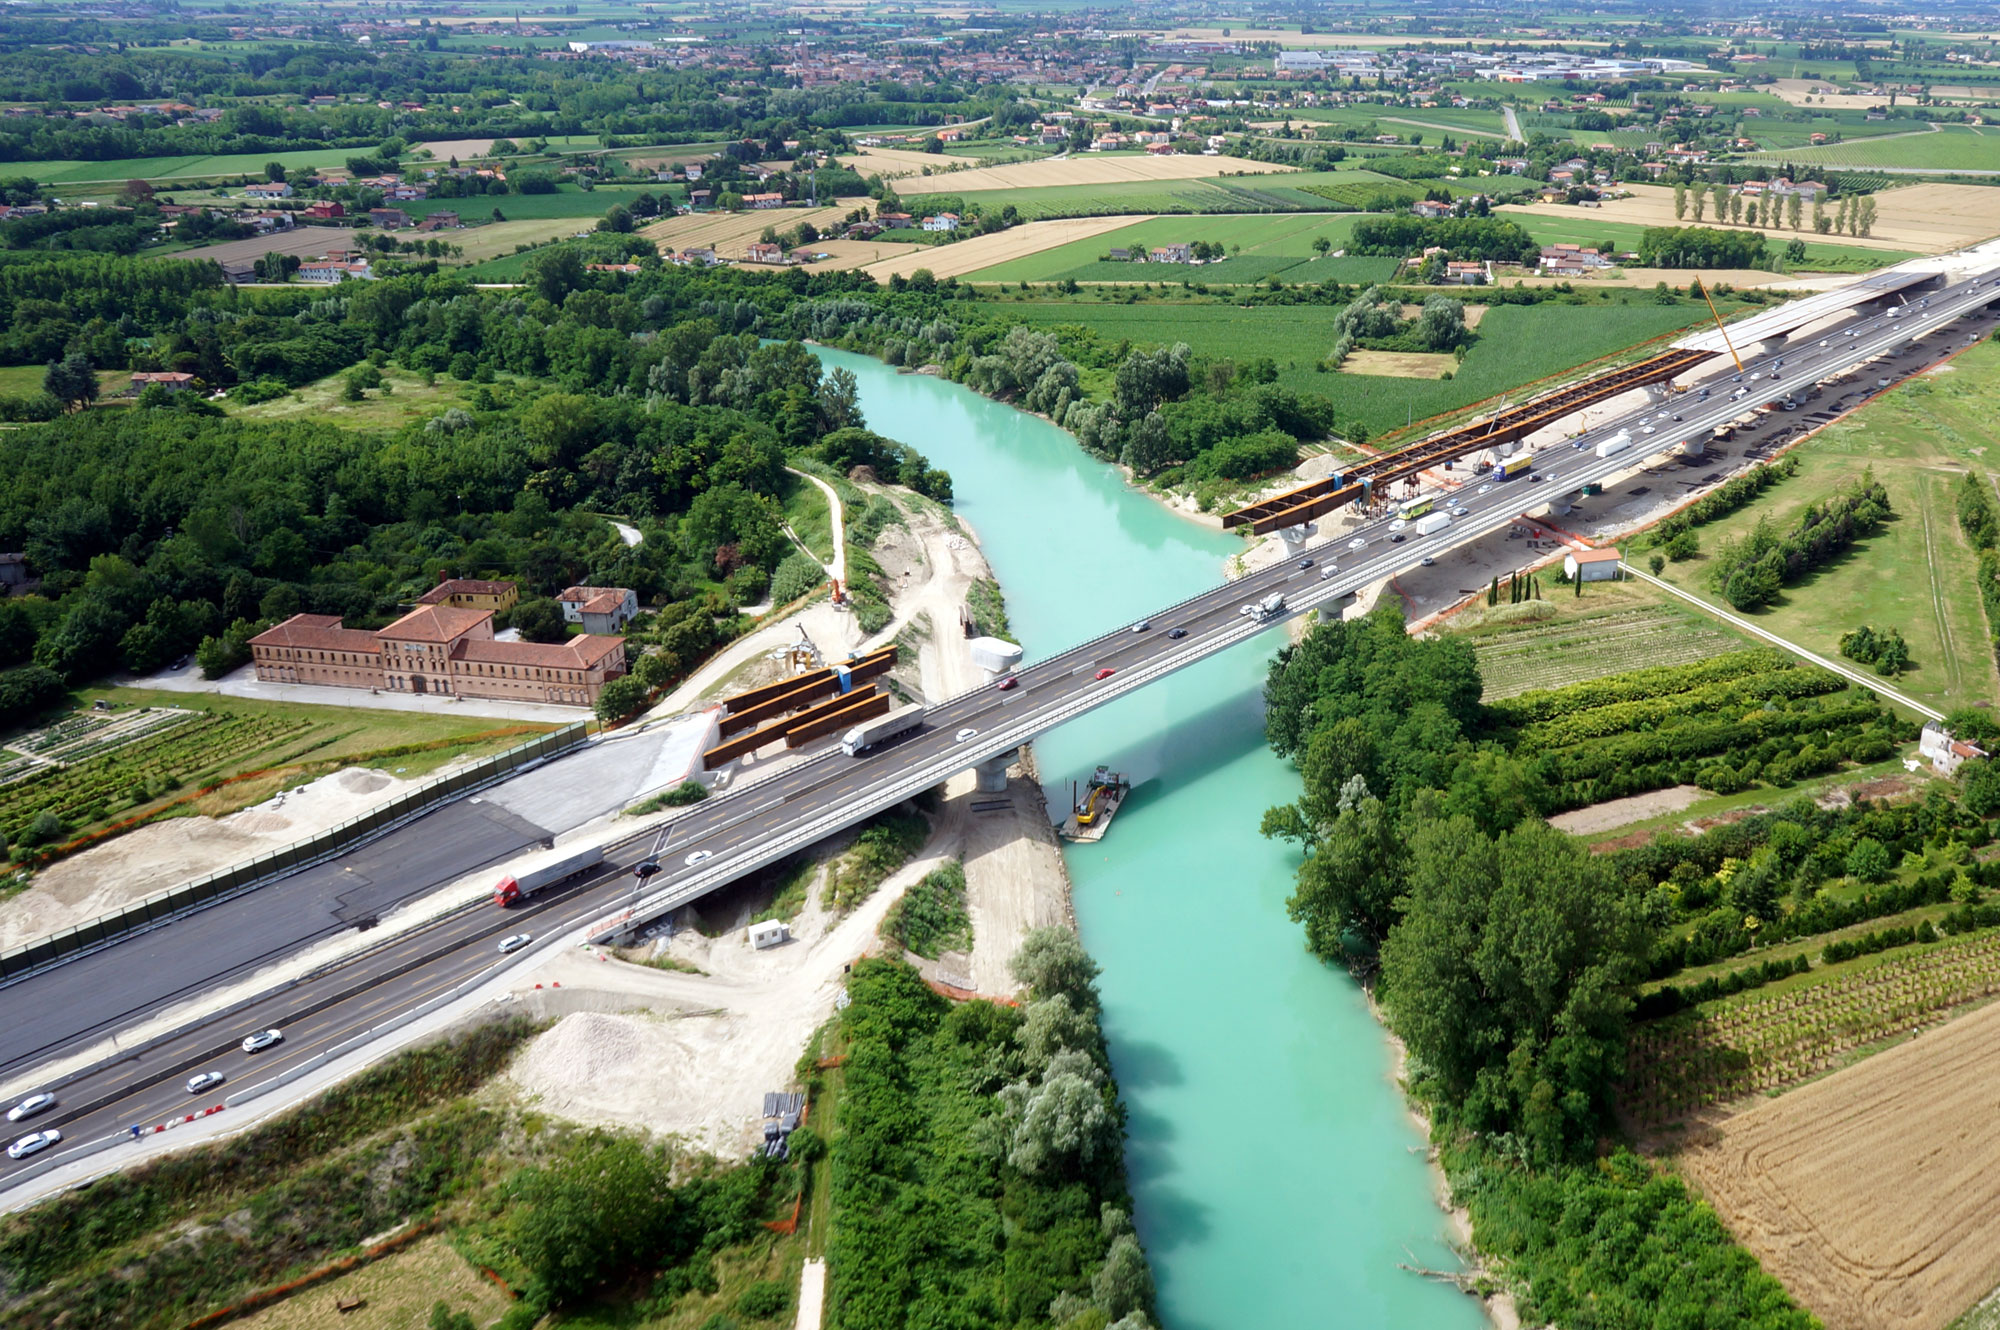 3rd lane of A4 motorway between Quarto D’Altino and San Donà di Piave